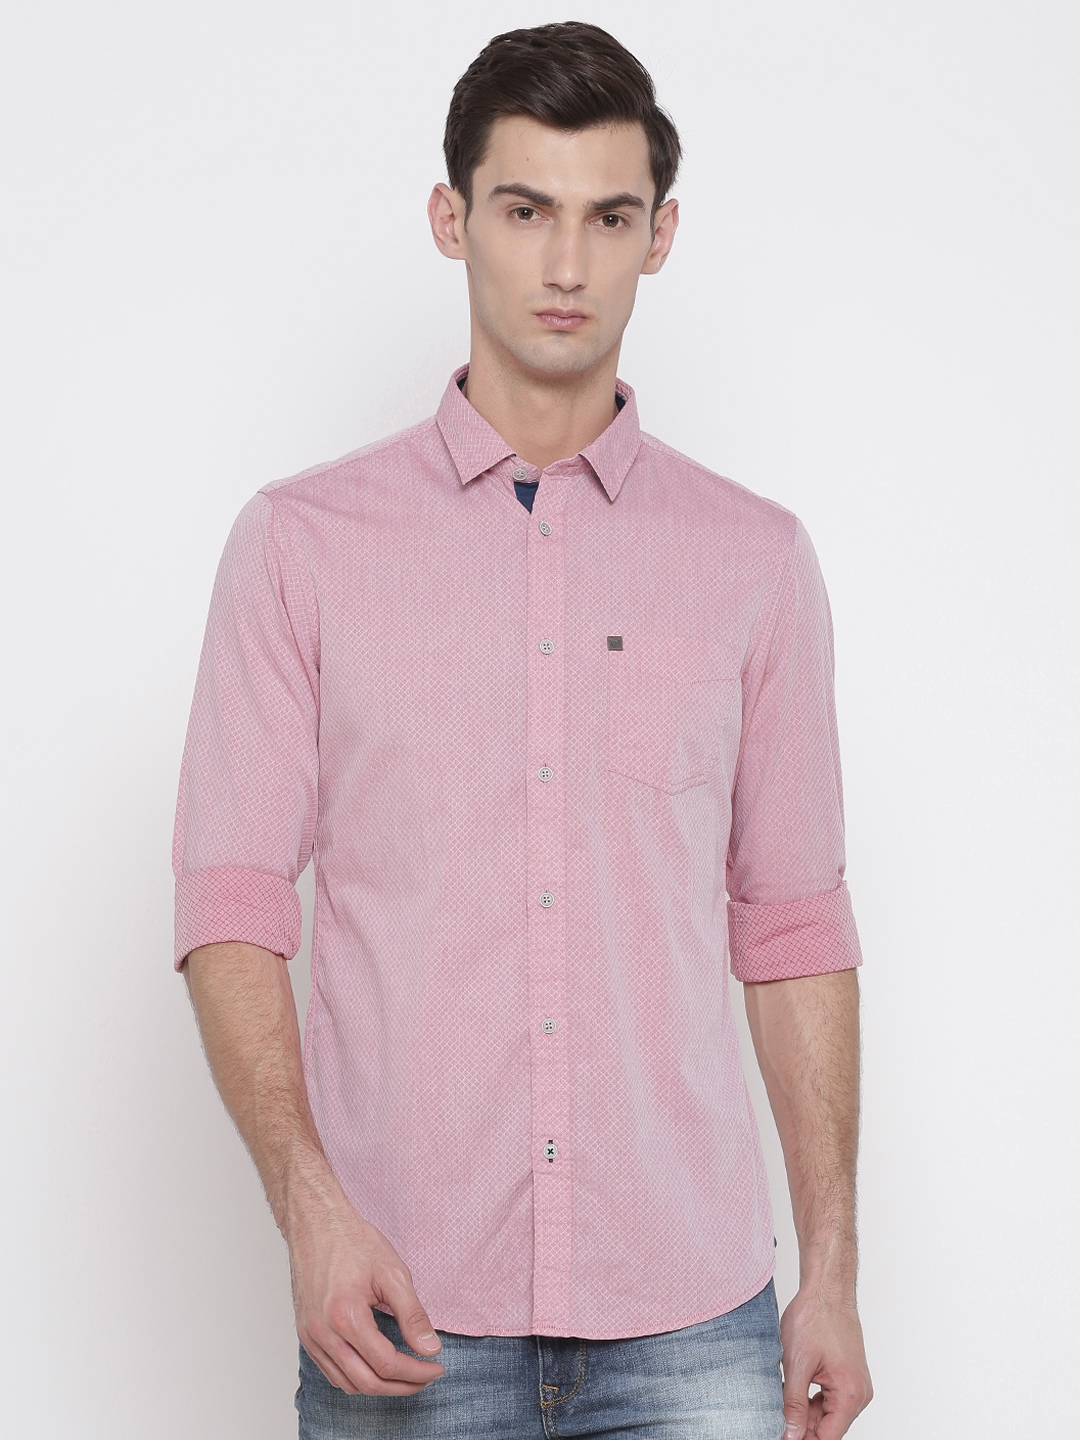 pink jean shirt